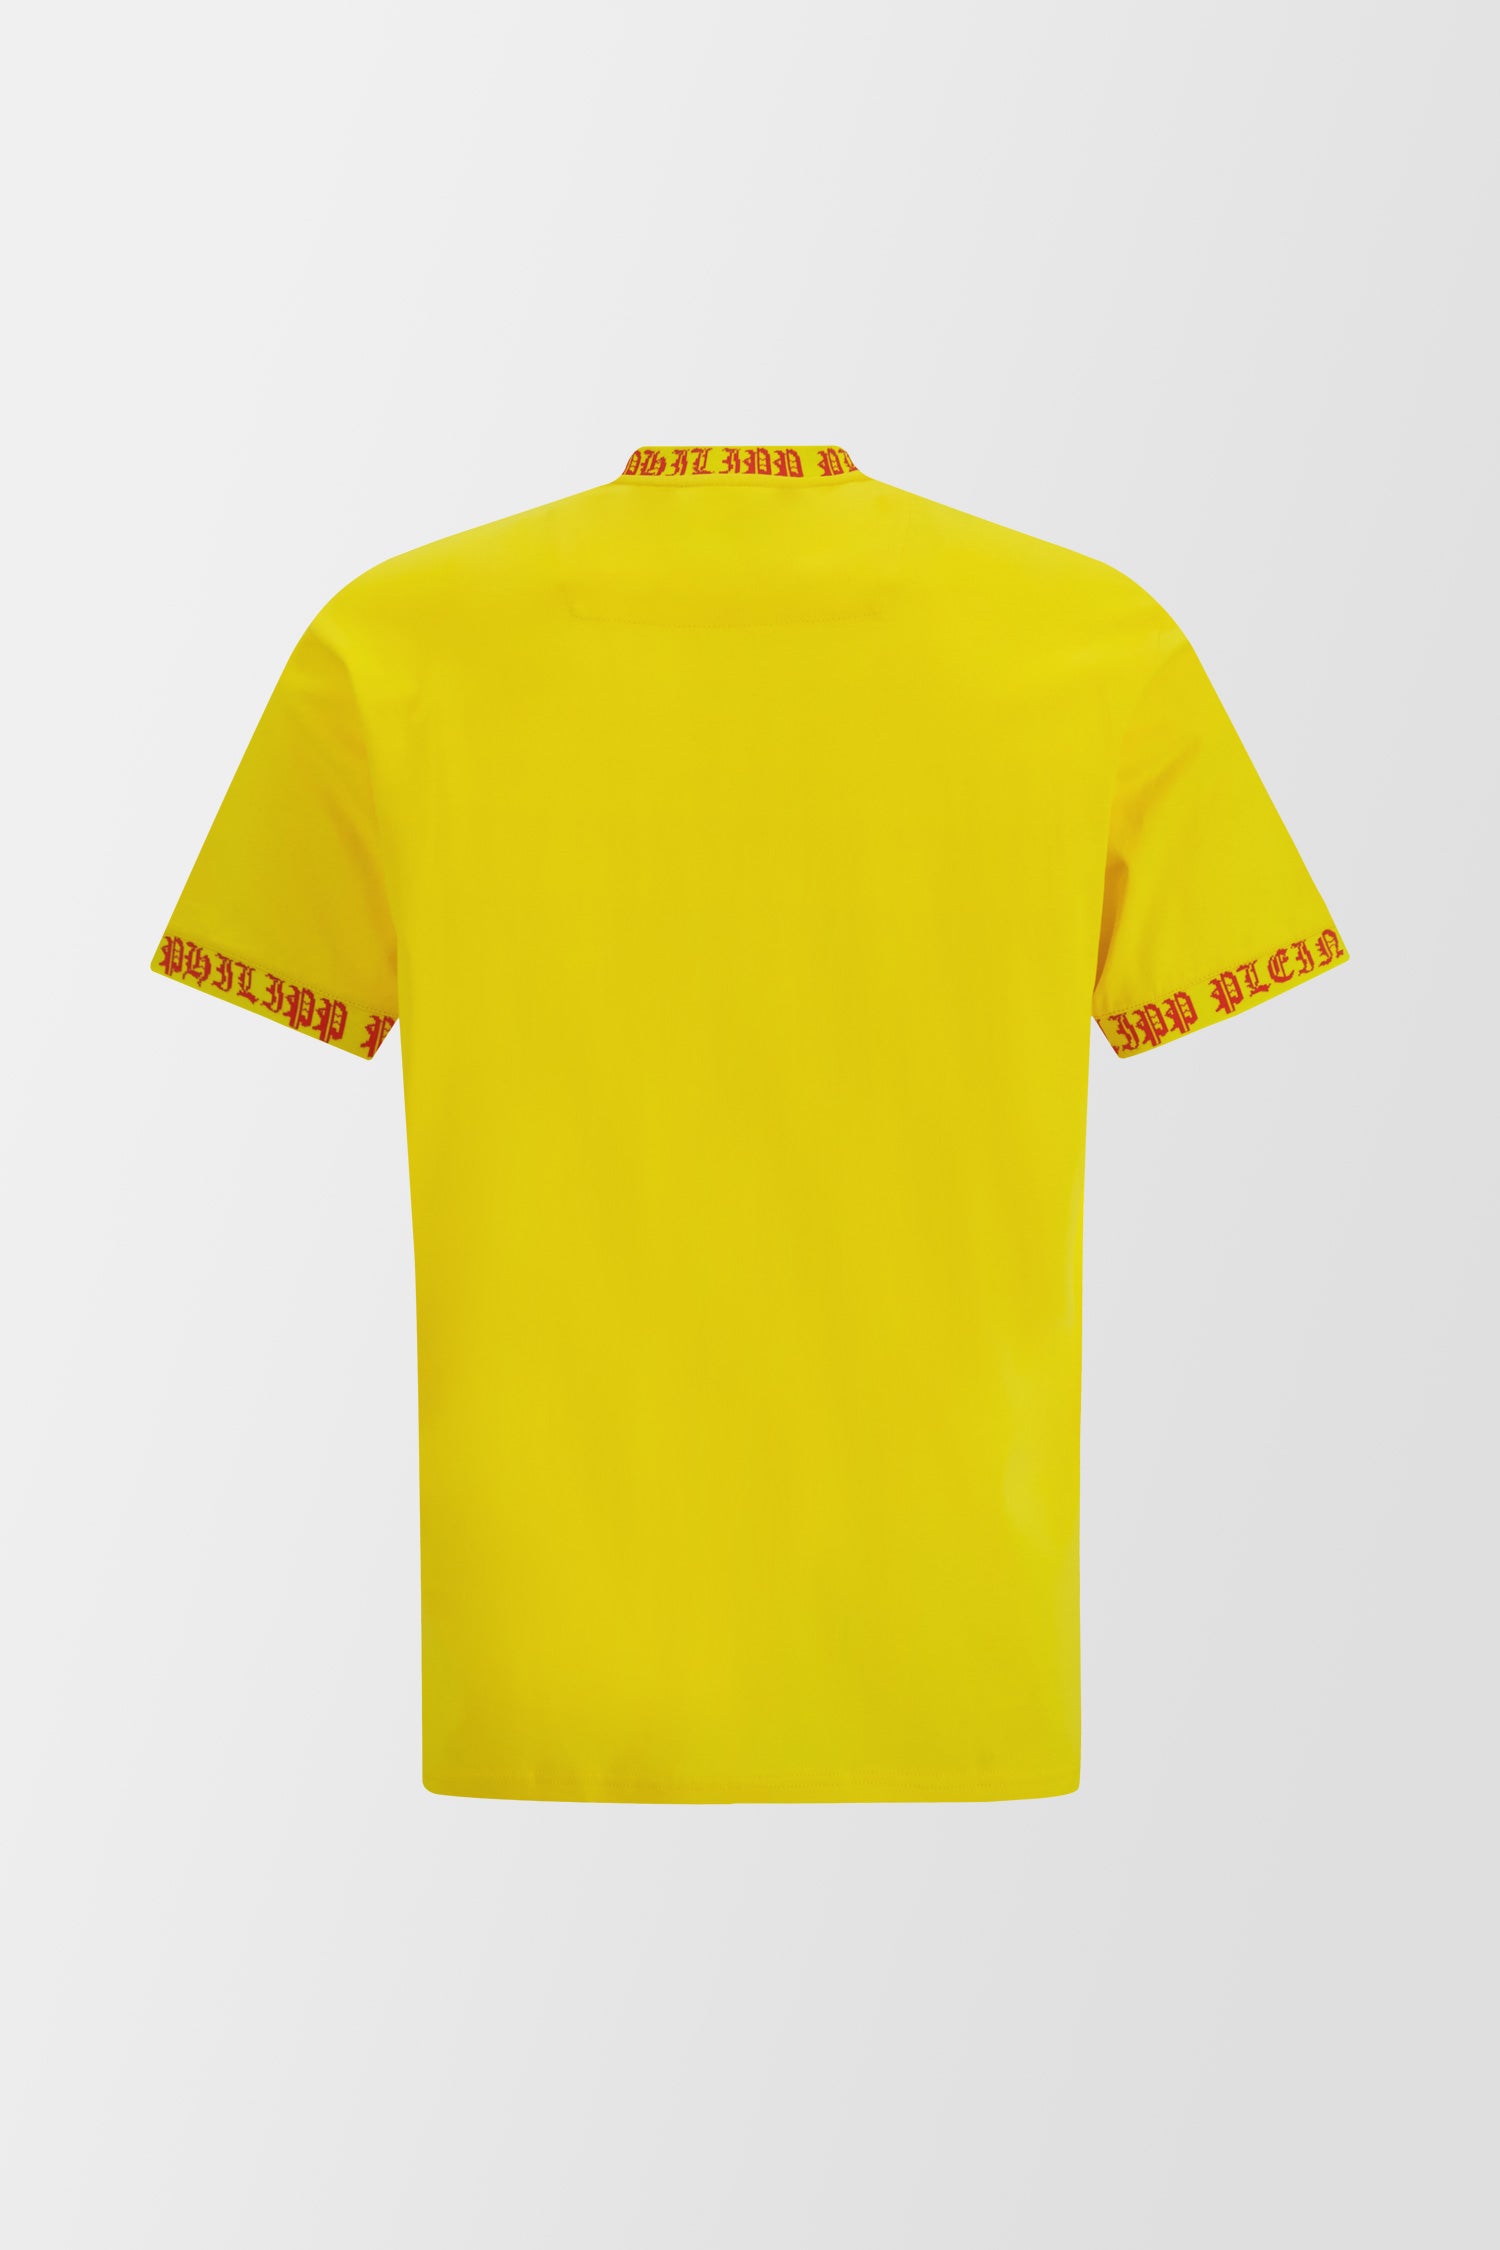 Philipp Plein Yellow Round Neck SS T-Shirt